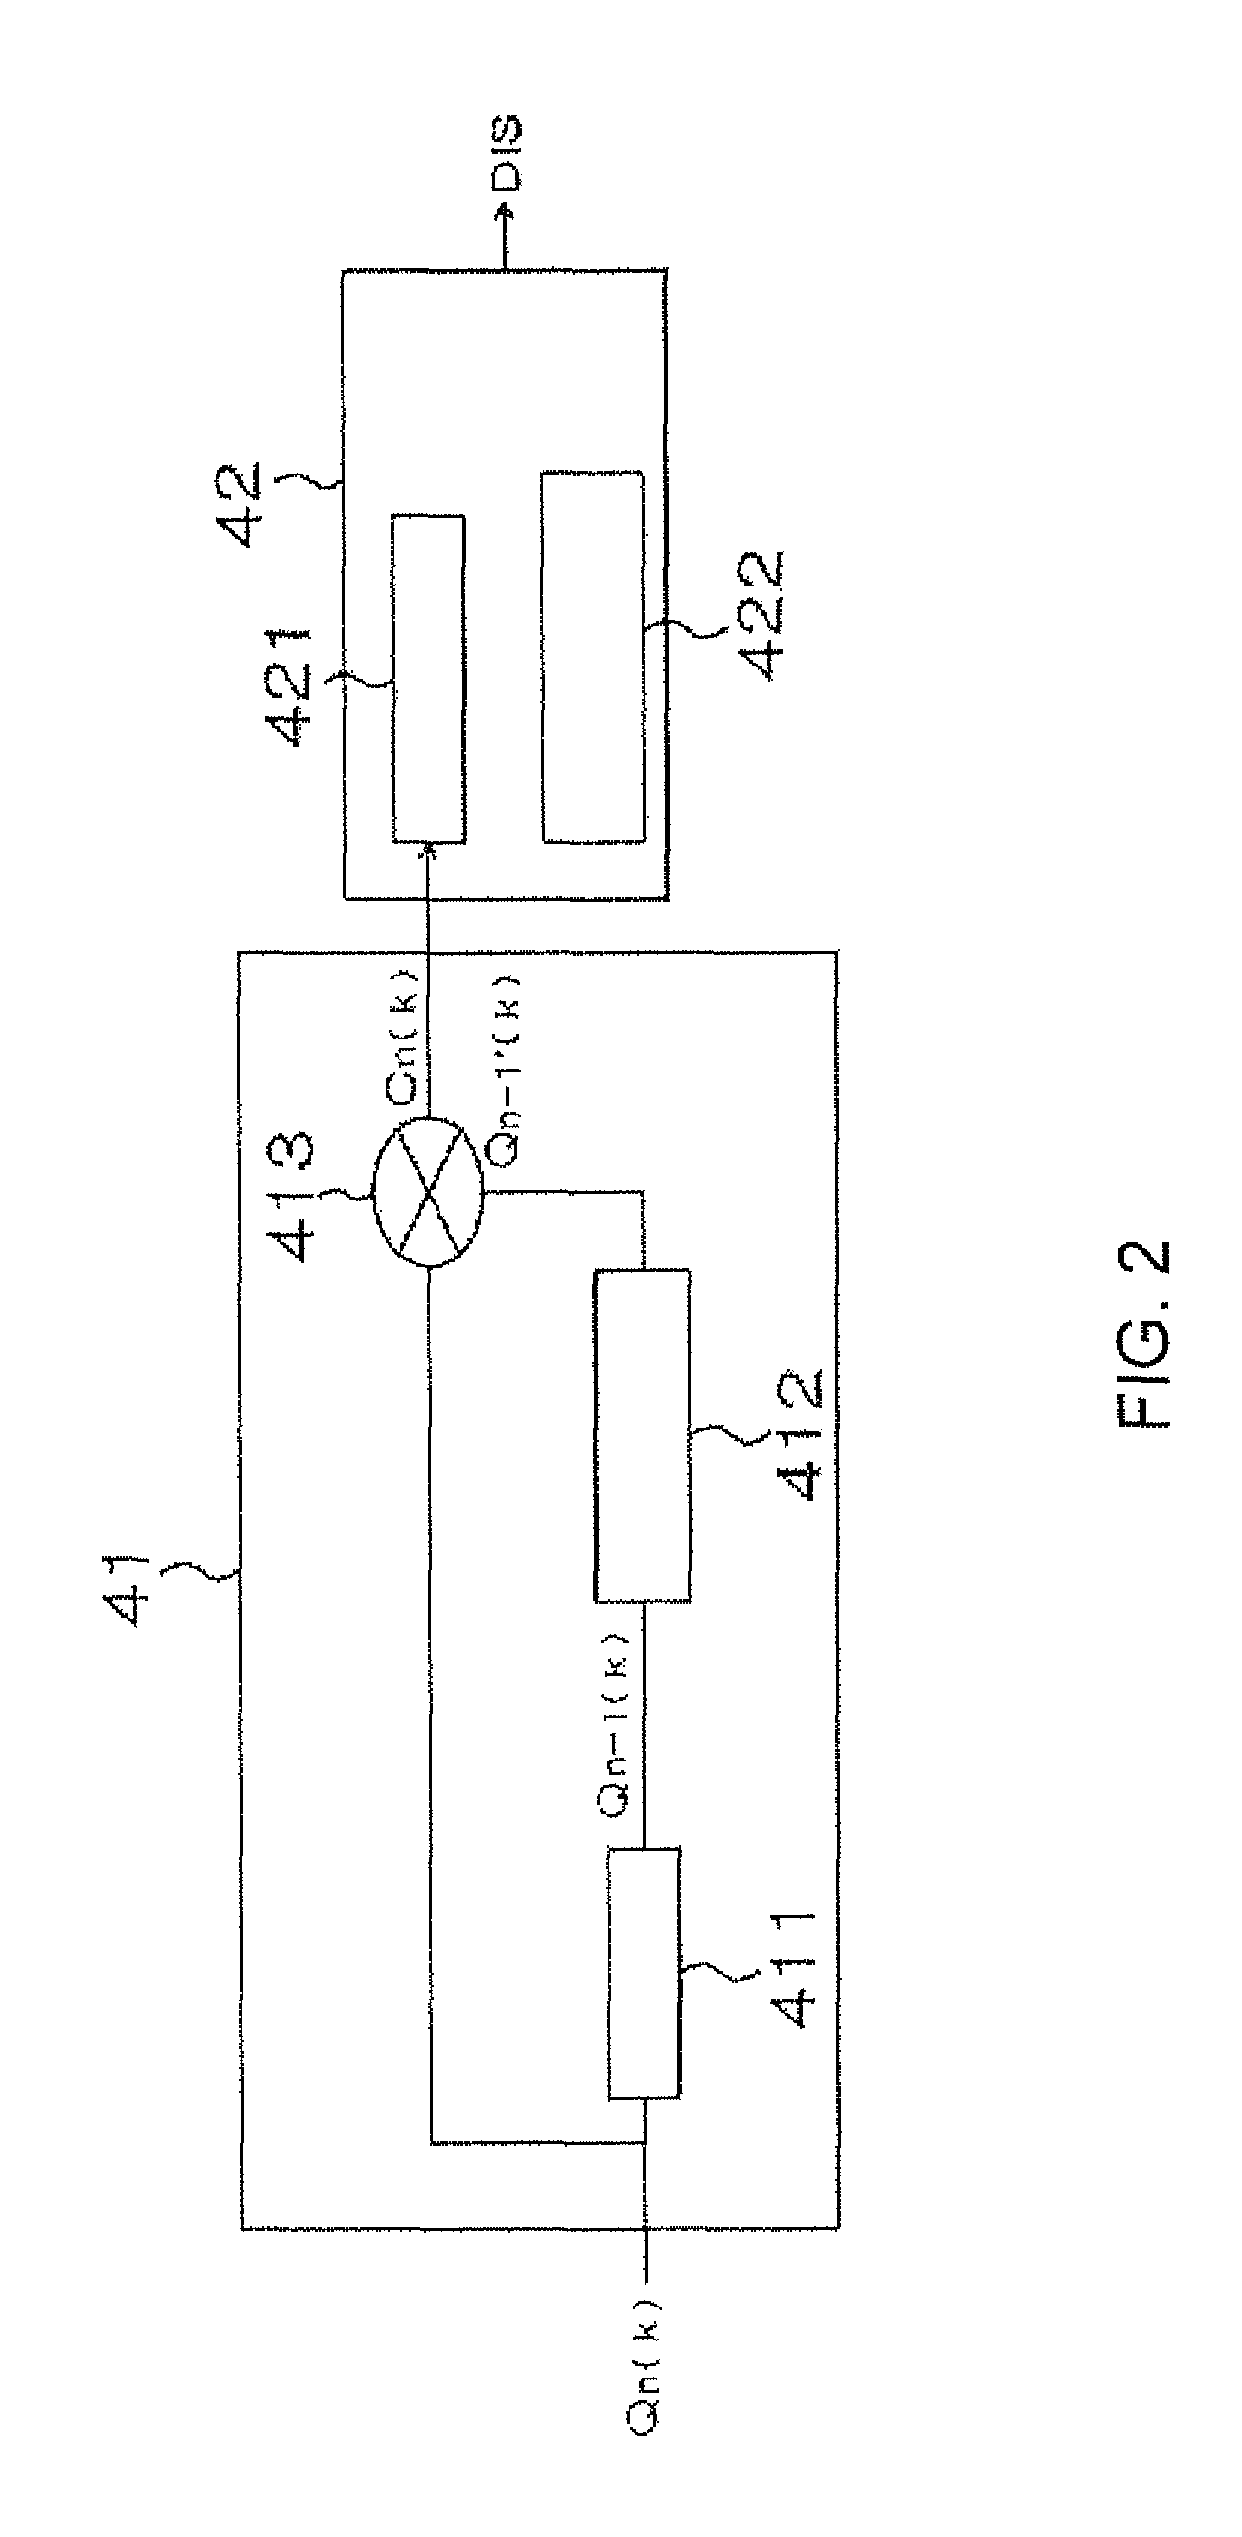 Apparatus and method for detecting spectrum inversion